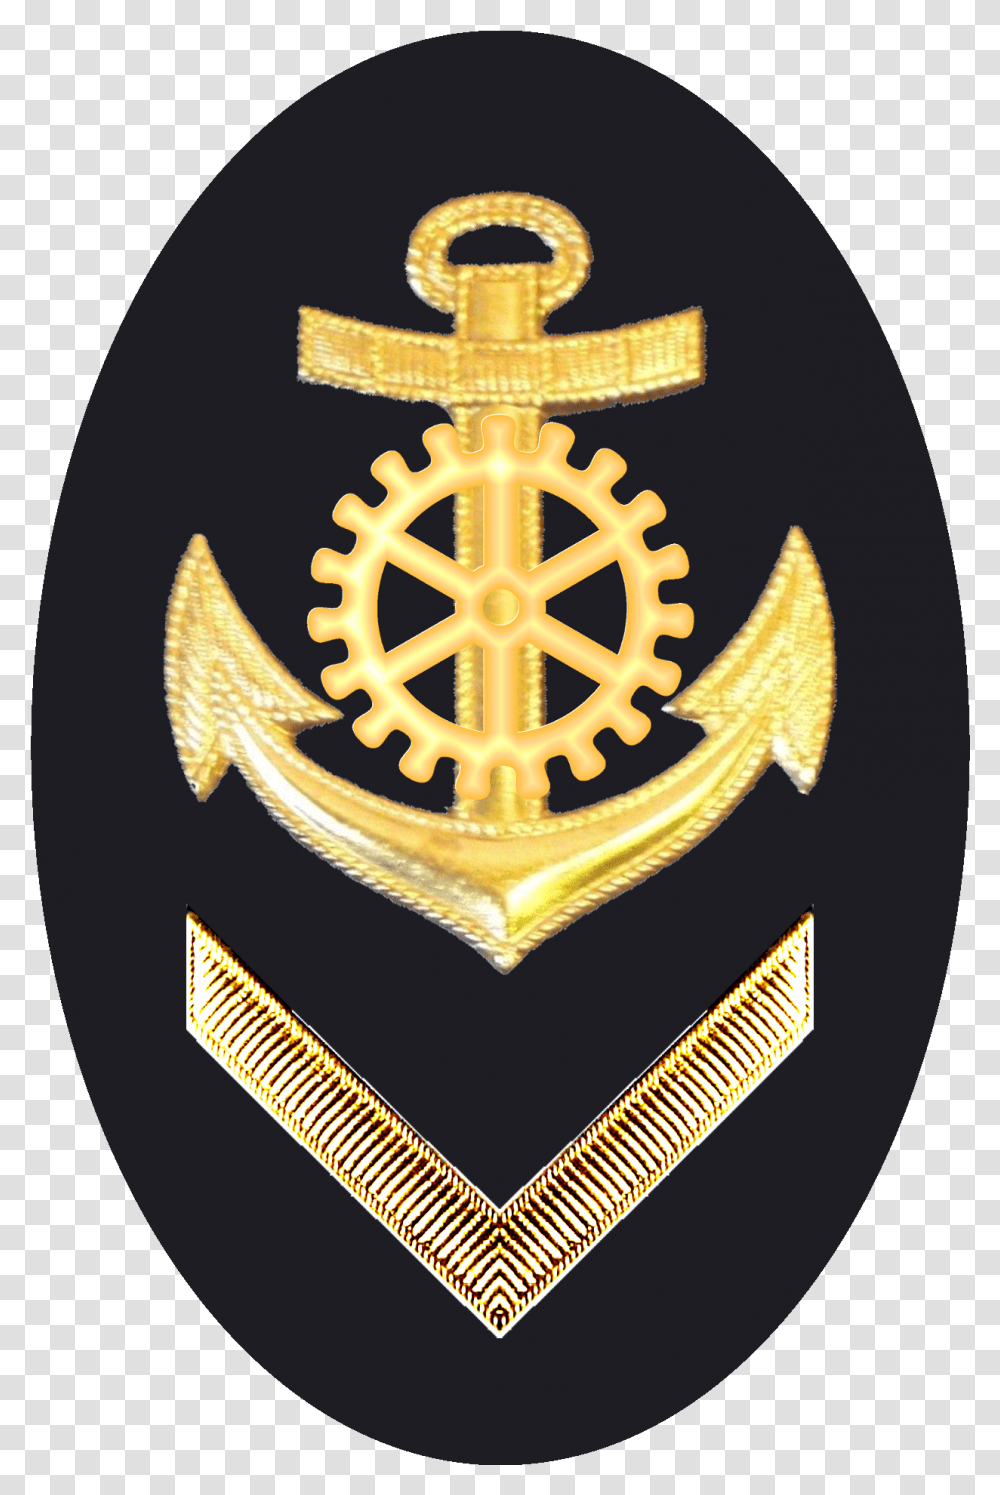 Obermaat Rmel Technik Emblem, Cross, Hook, Anchor Transparent Png